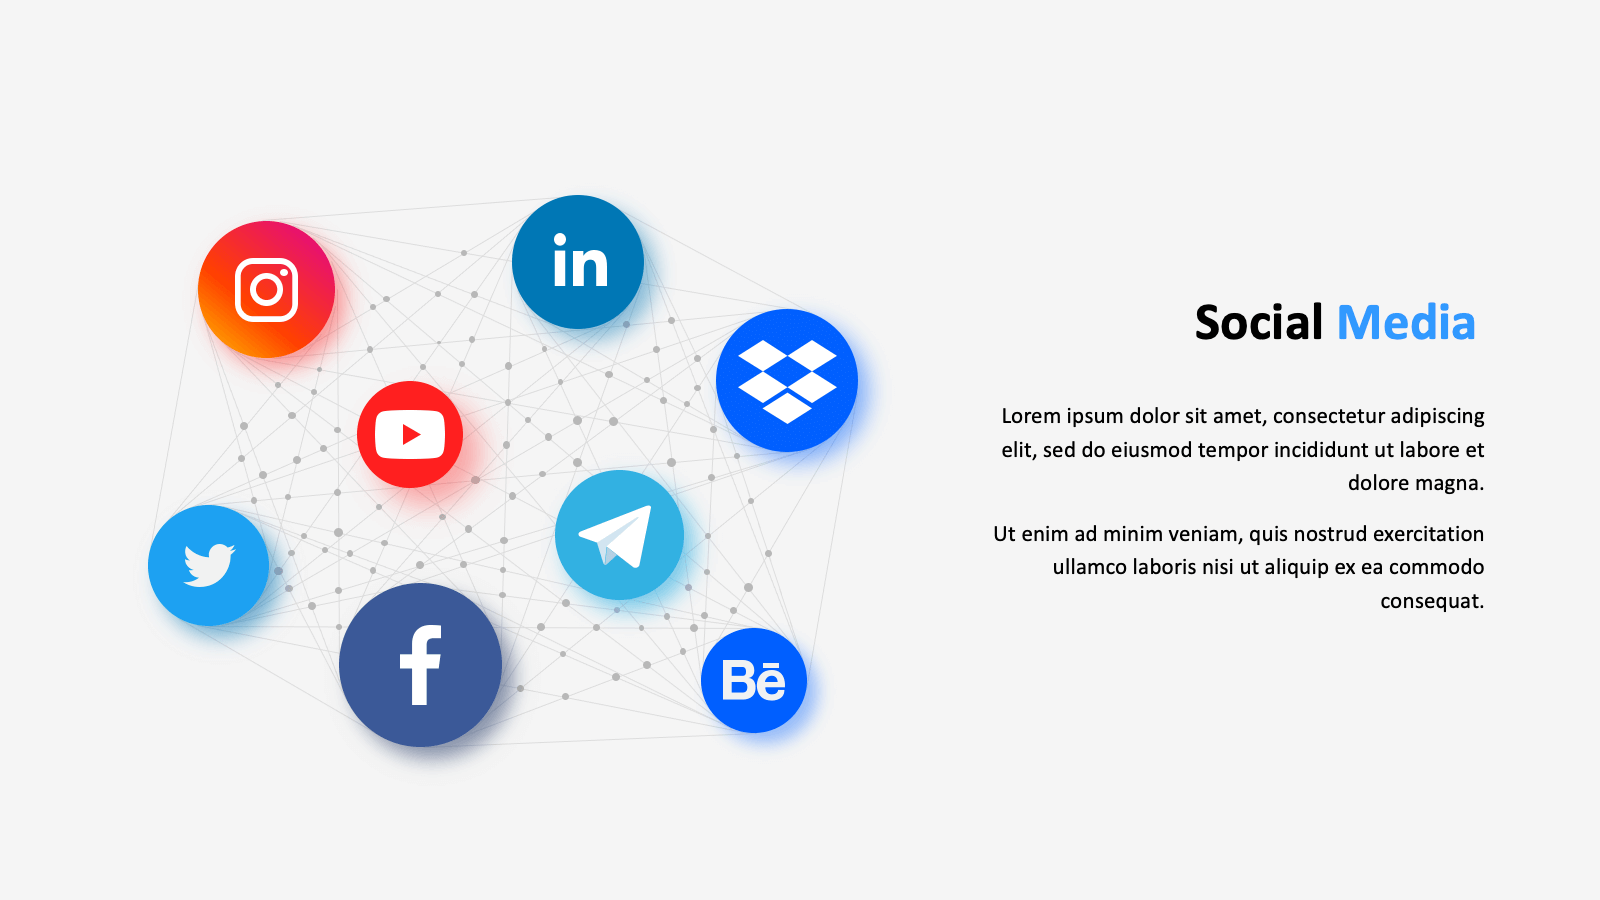 social media presentation ppt download